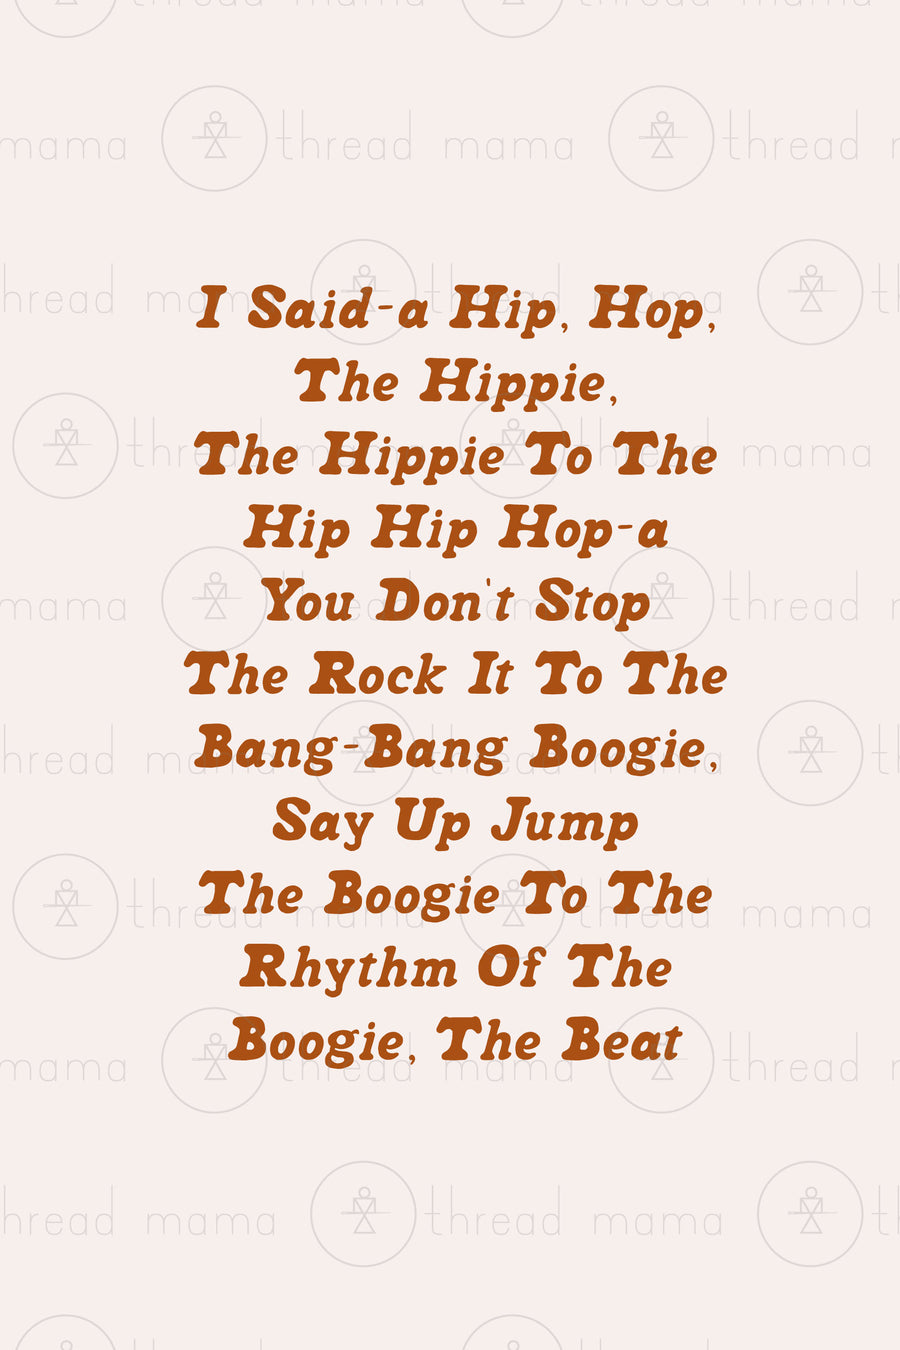 Boogie The Beat (Set)